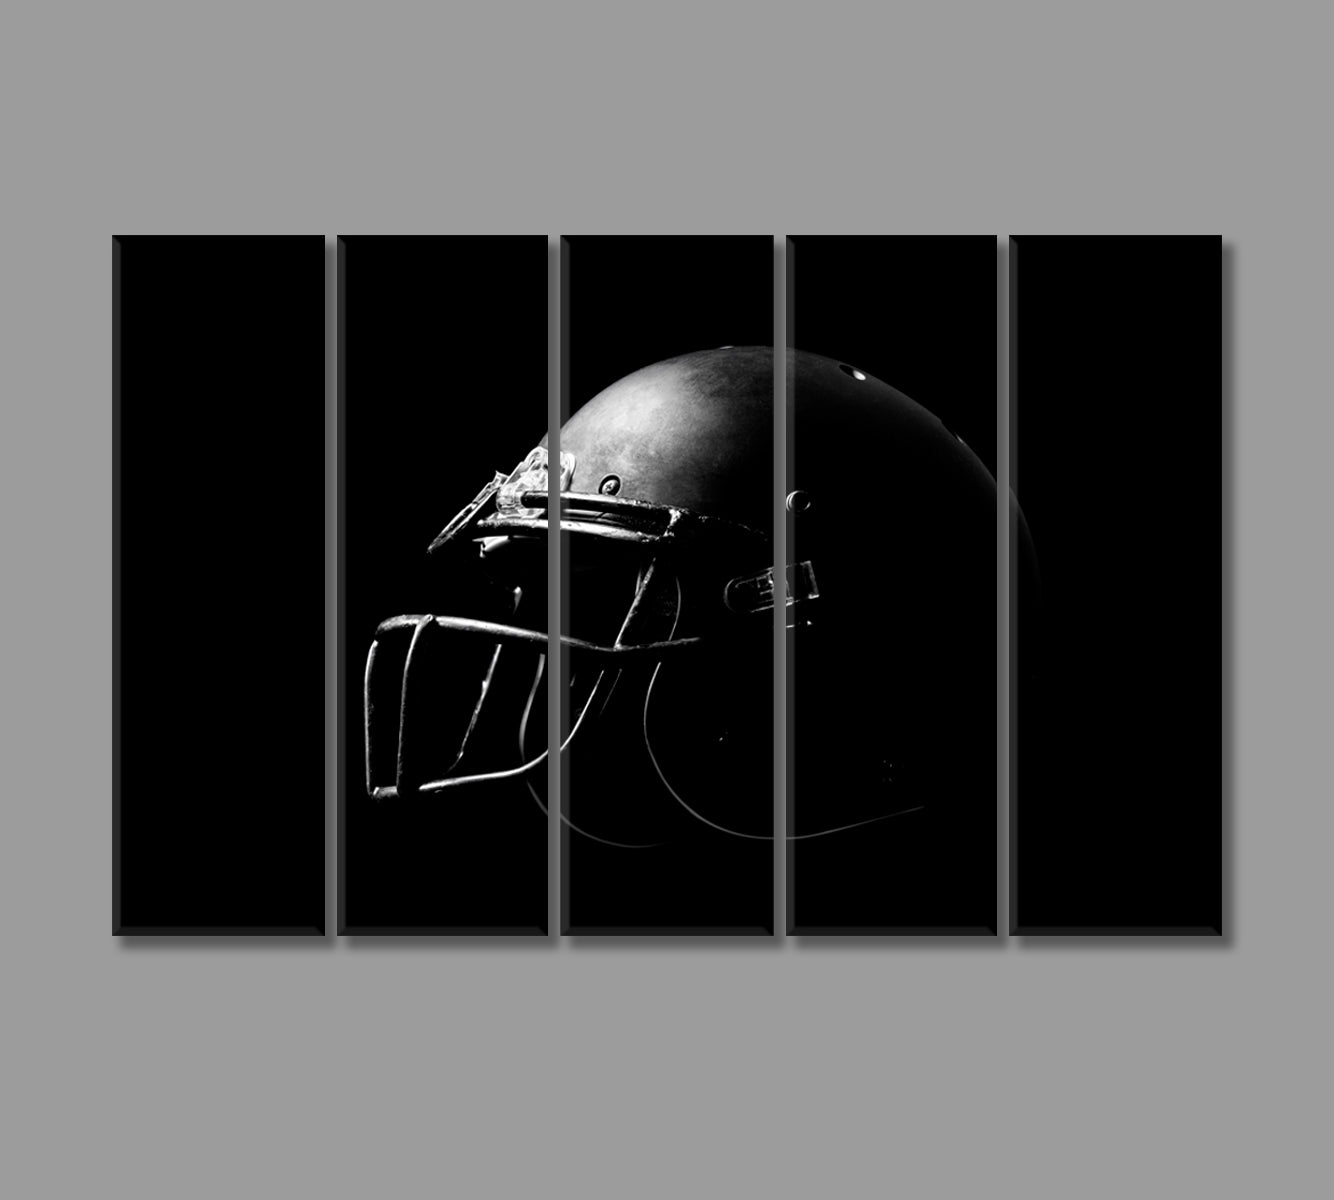 American Football Helmet Canvas Print-Canvas Print-CetArt-5 Panels-36x24 inches-CetArt